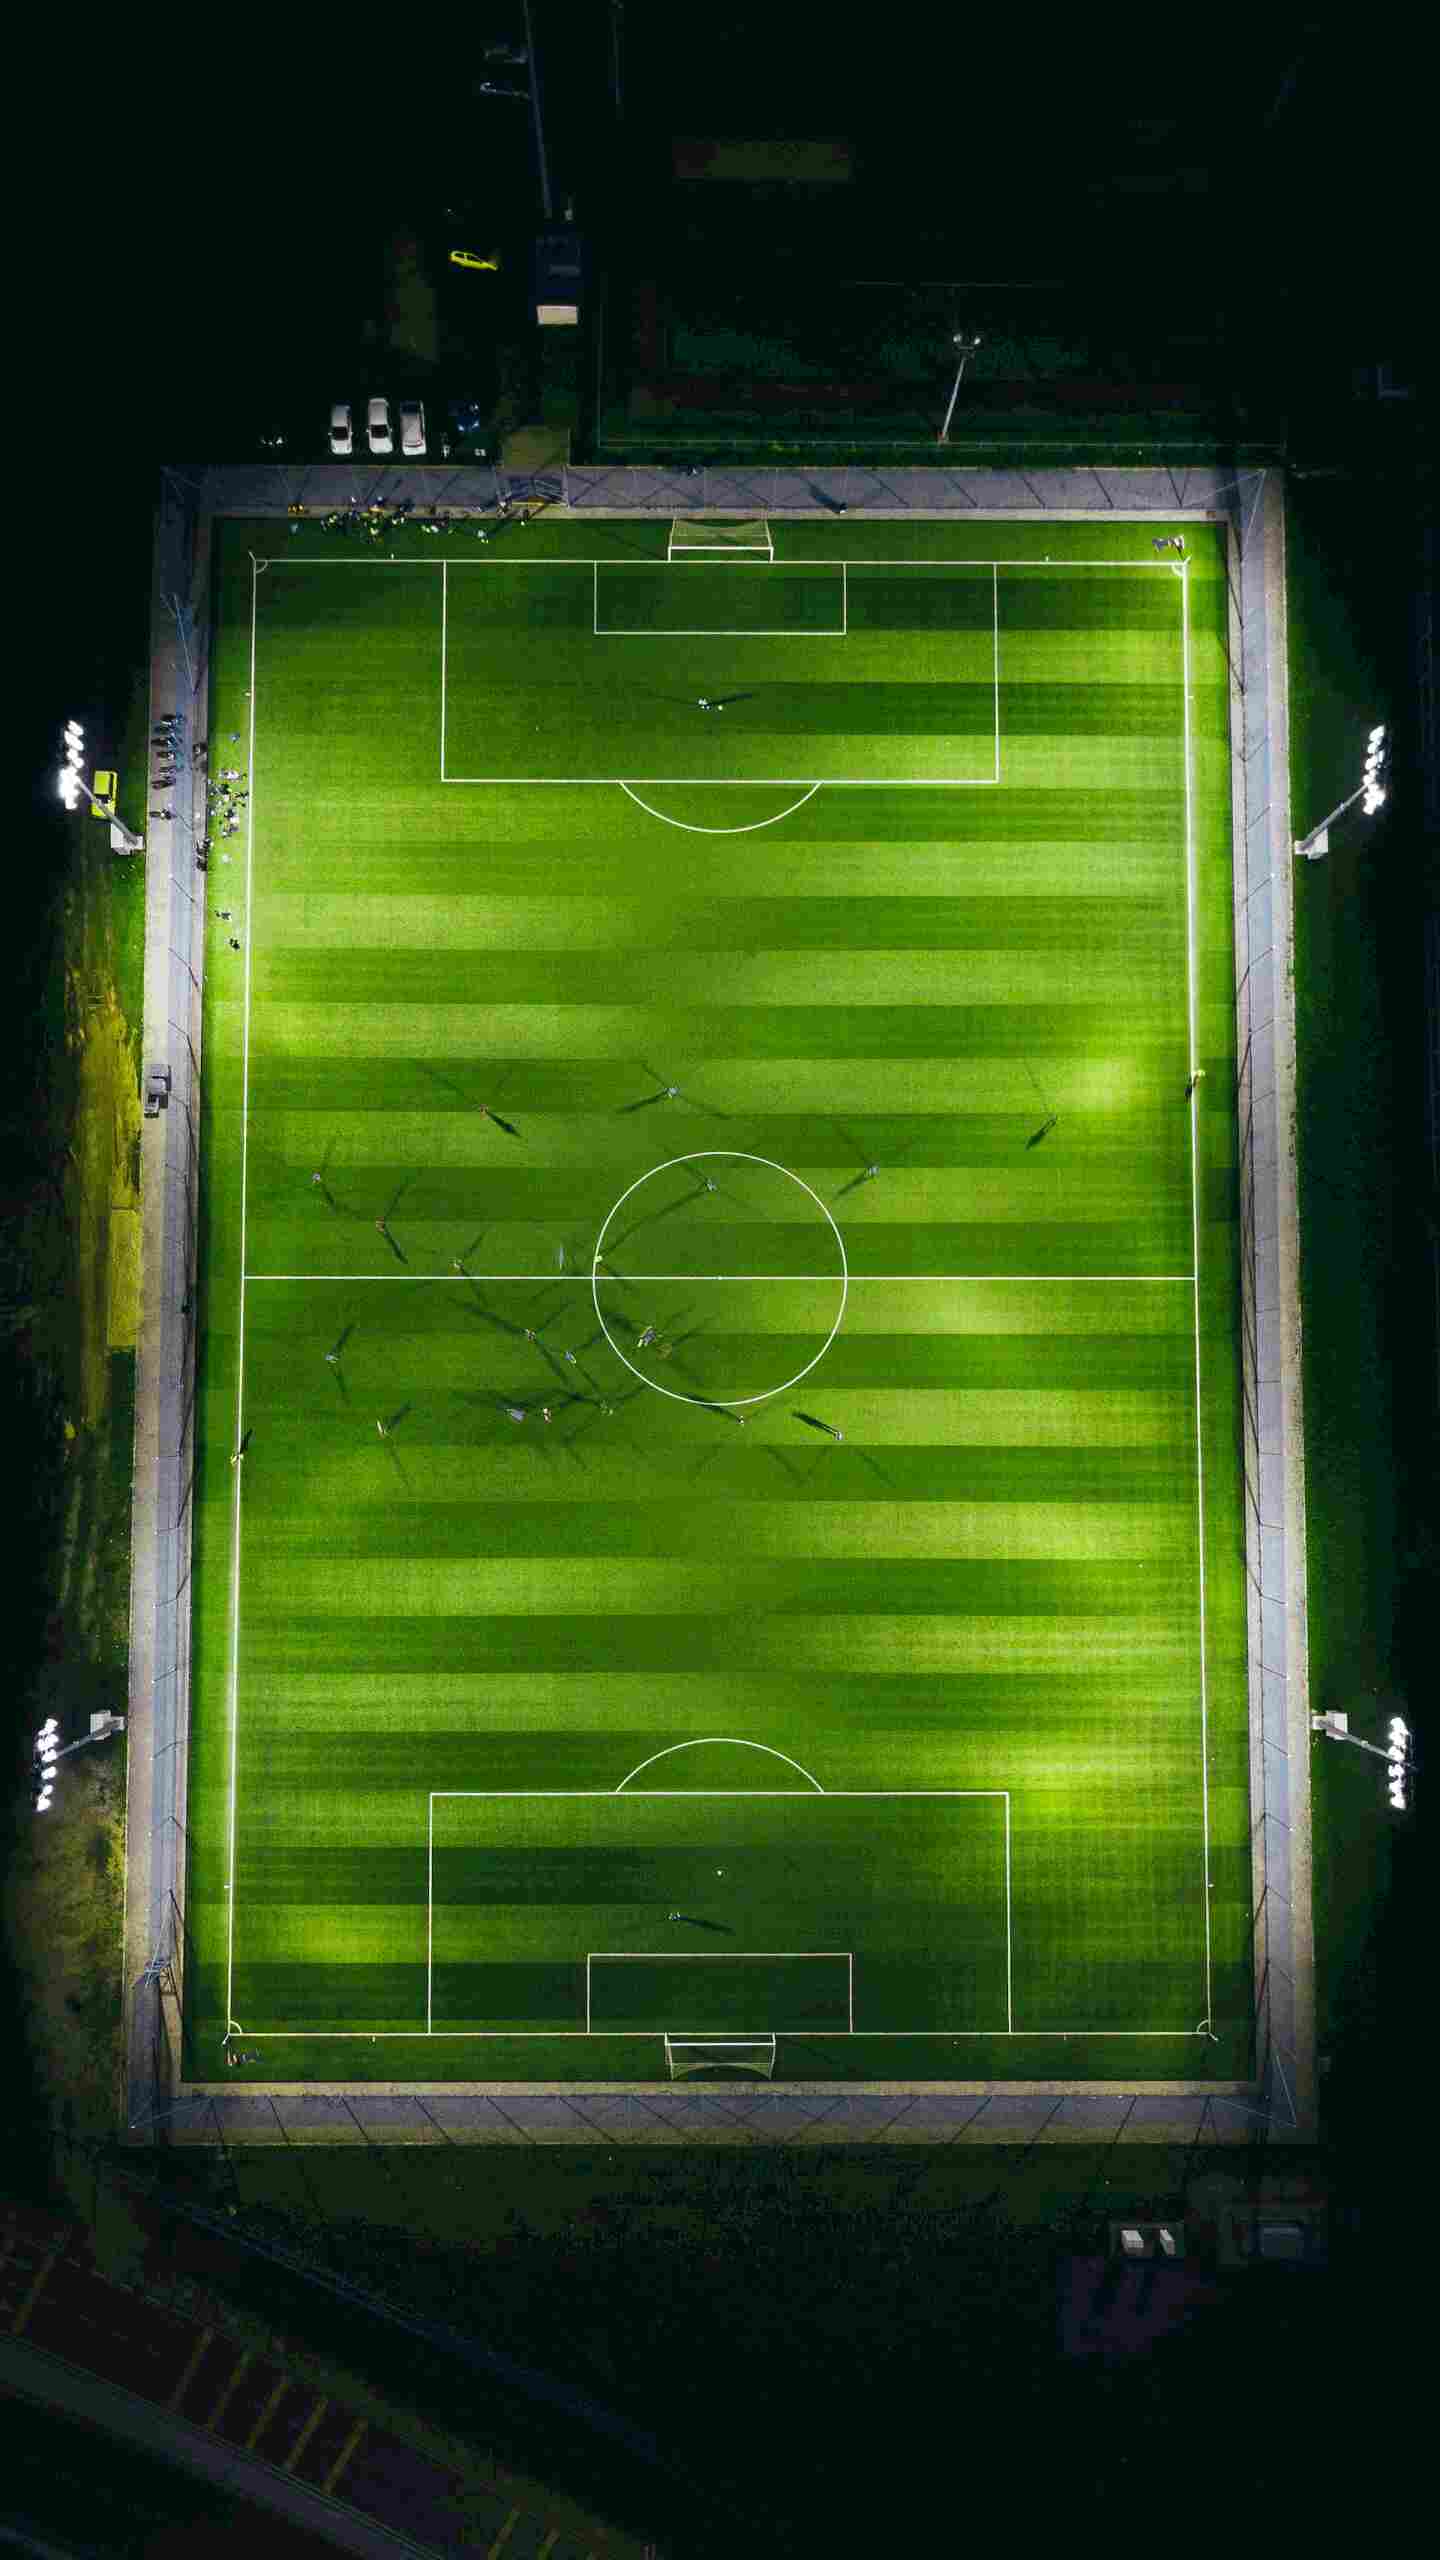 Football Field